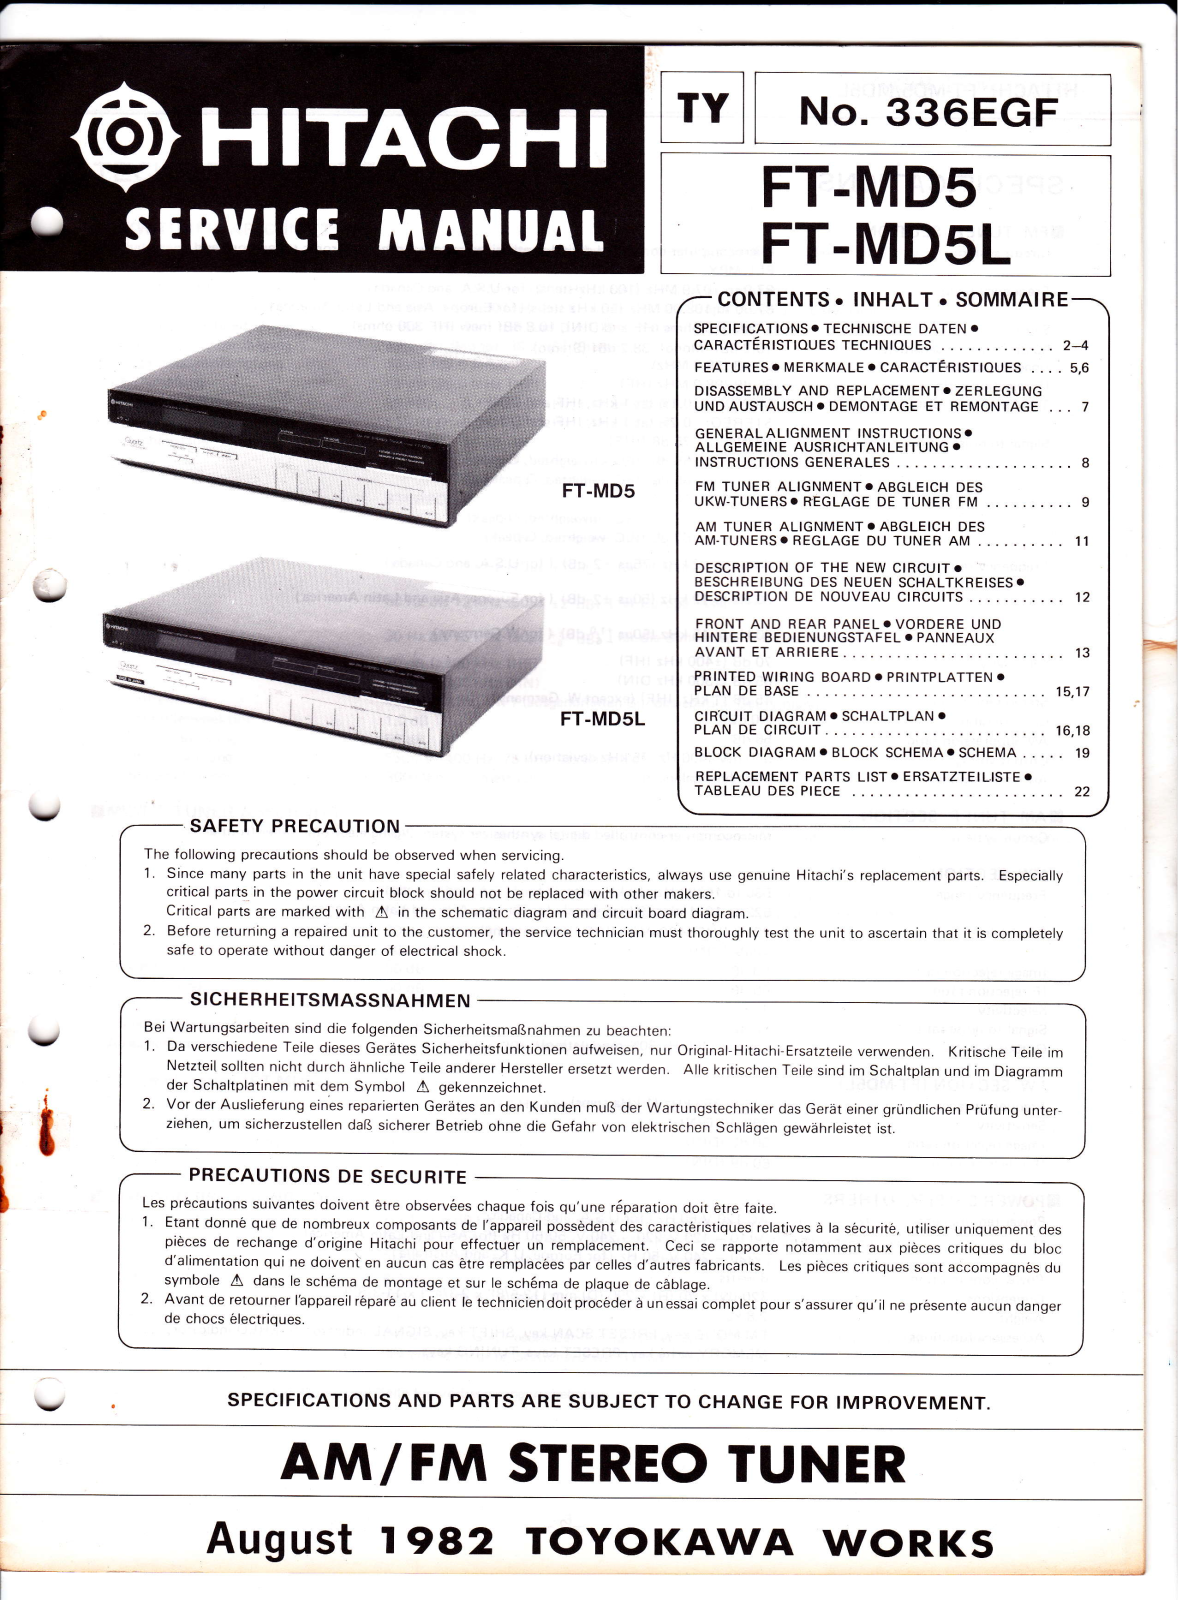 Hitachi FT-MD5, FT-MD5L Service Manual